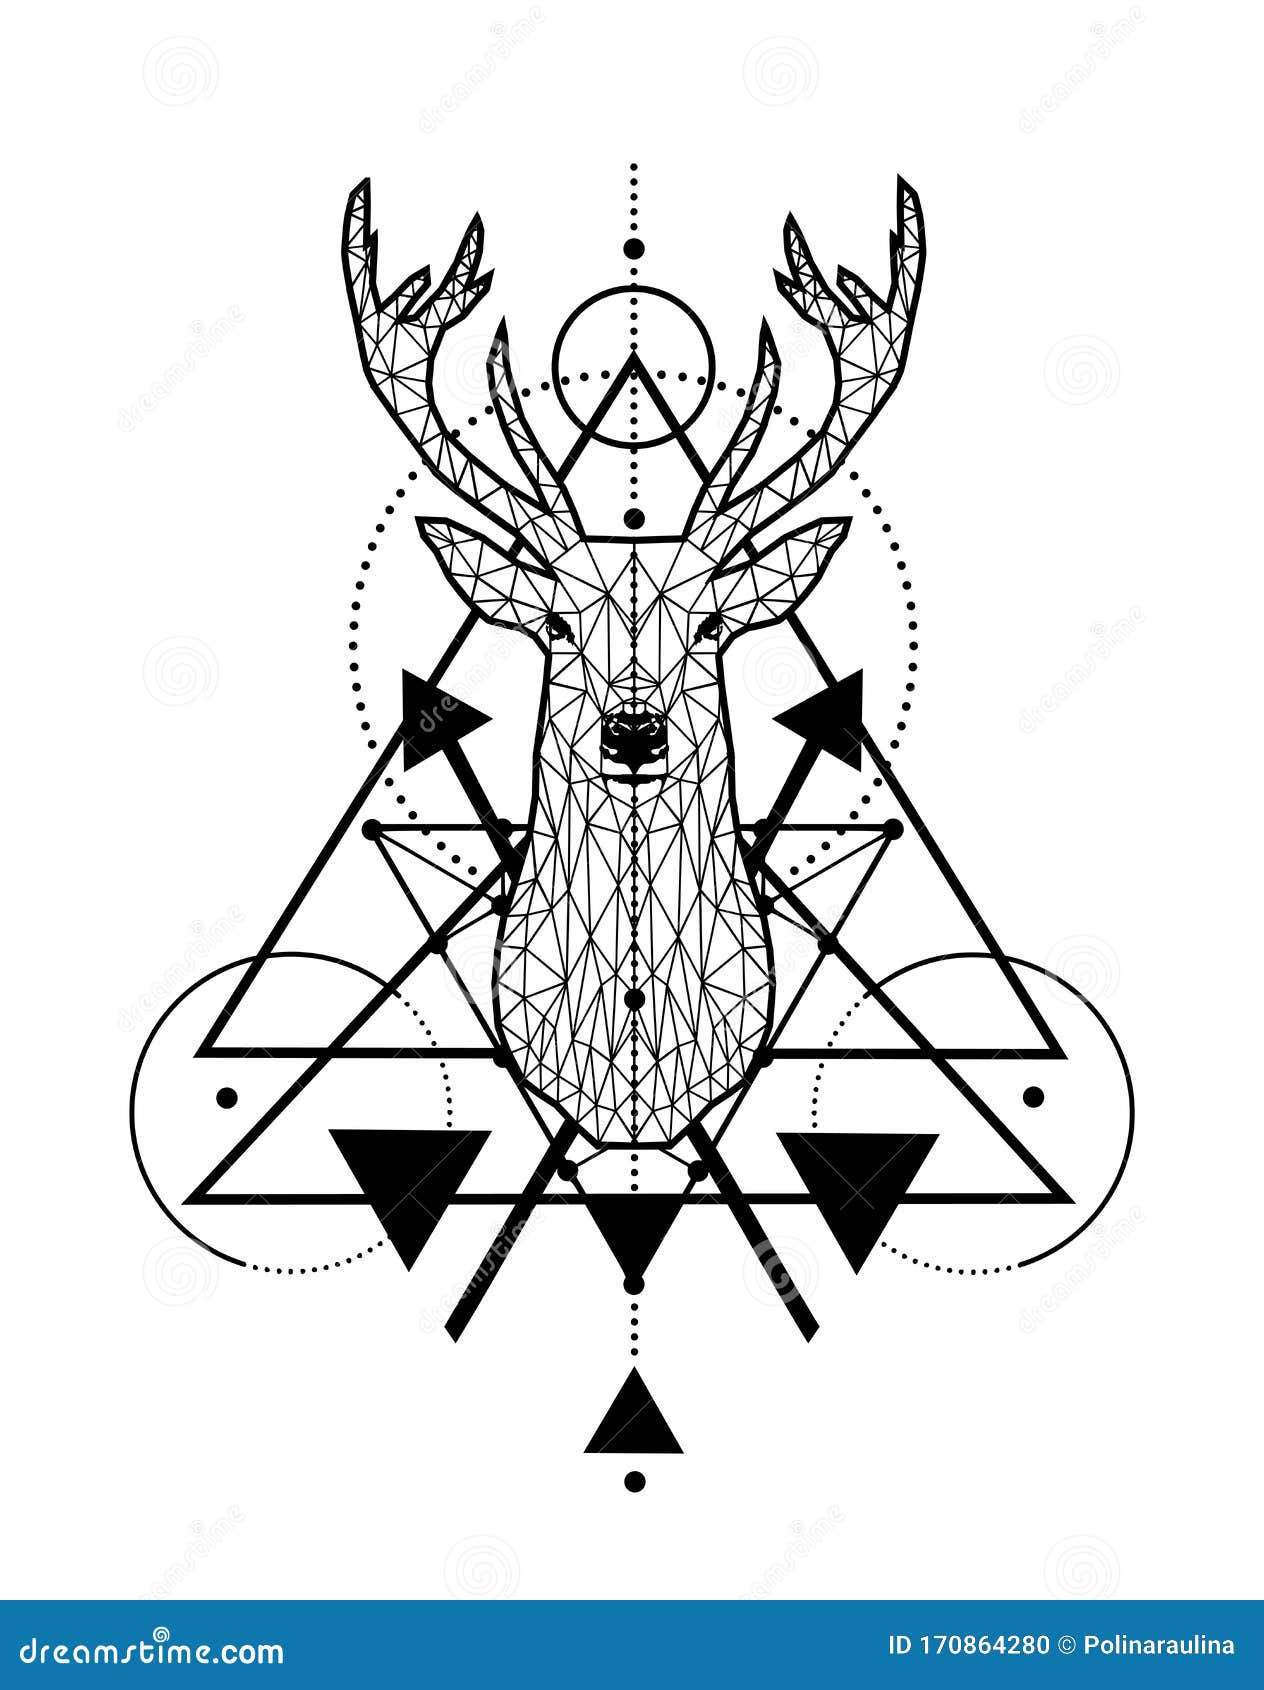 1955 Geometric Deer Tattoo Images Stock Photos  Vectors  Shutterstock